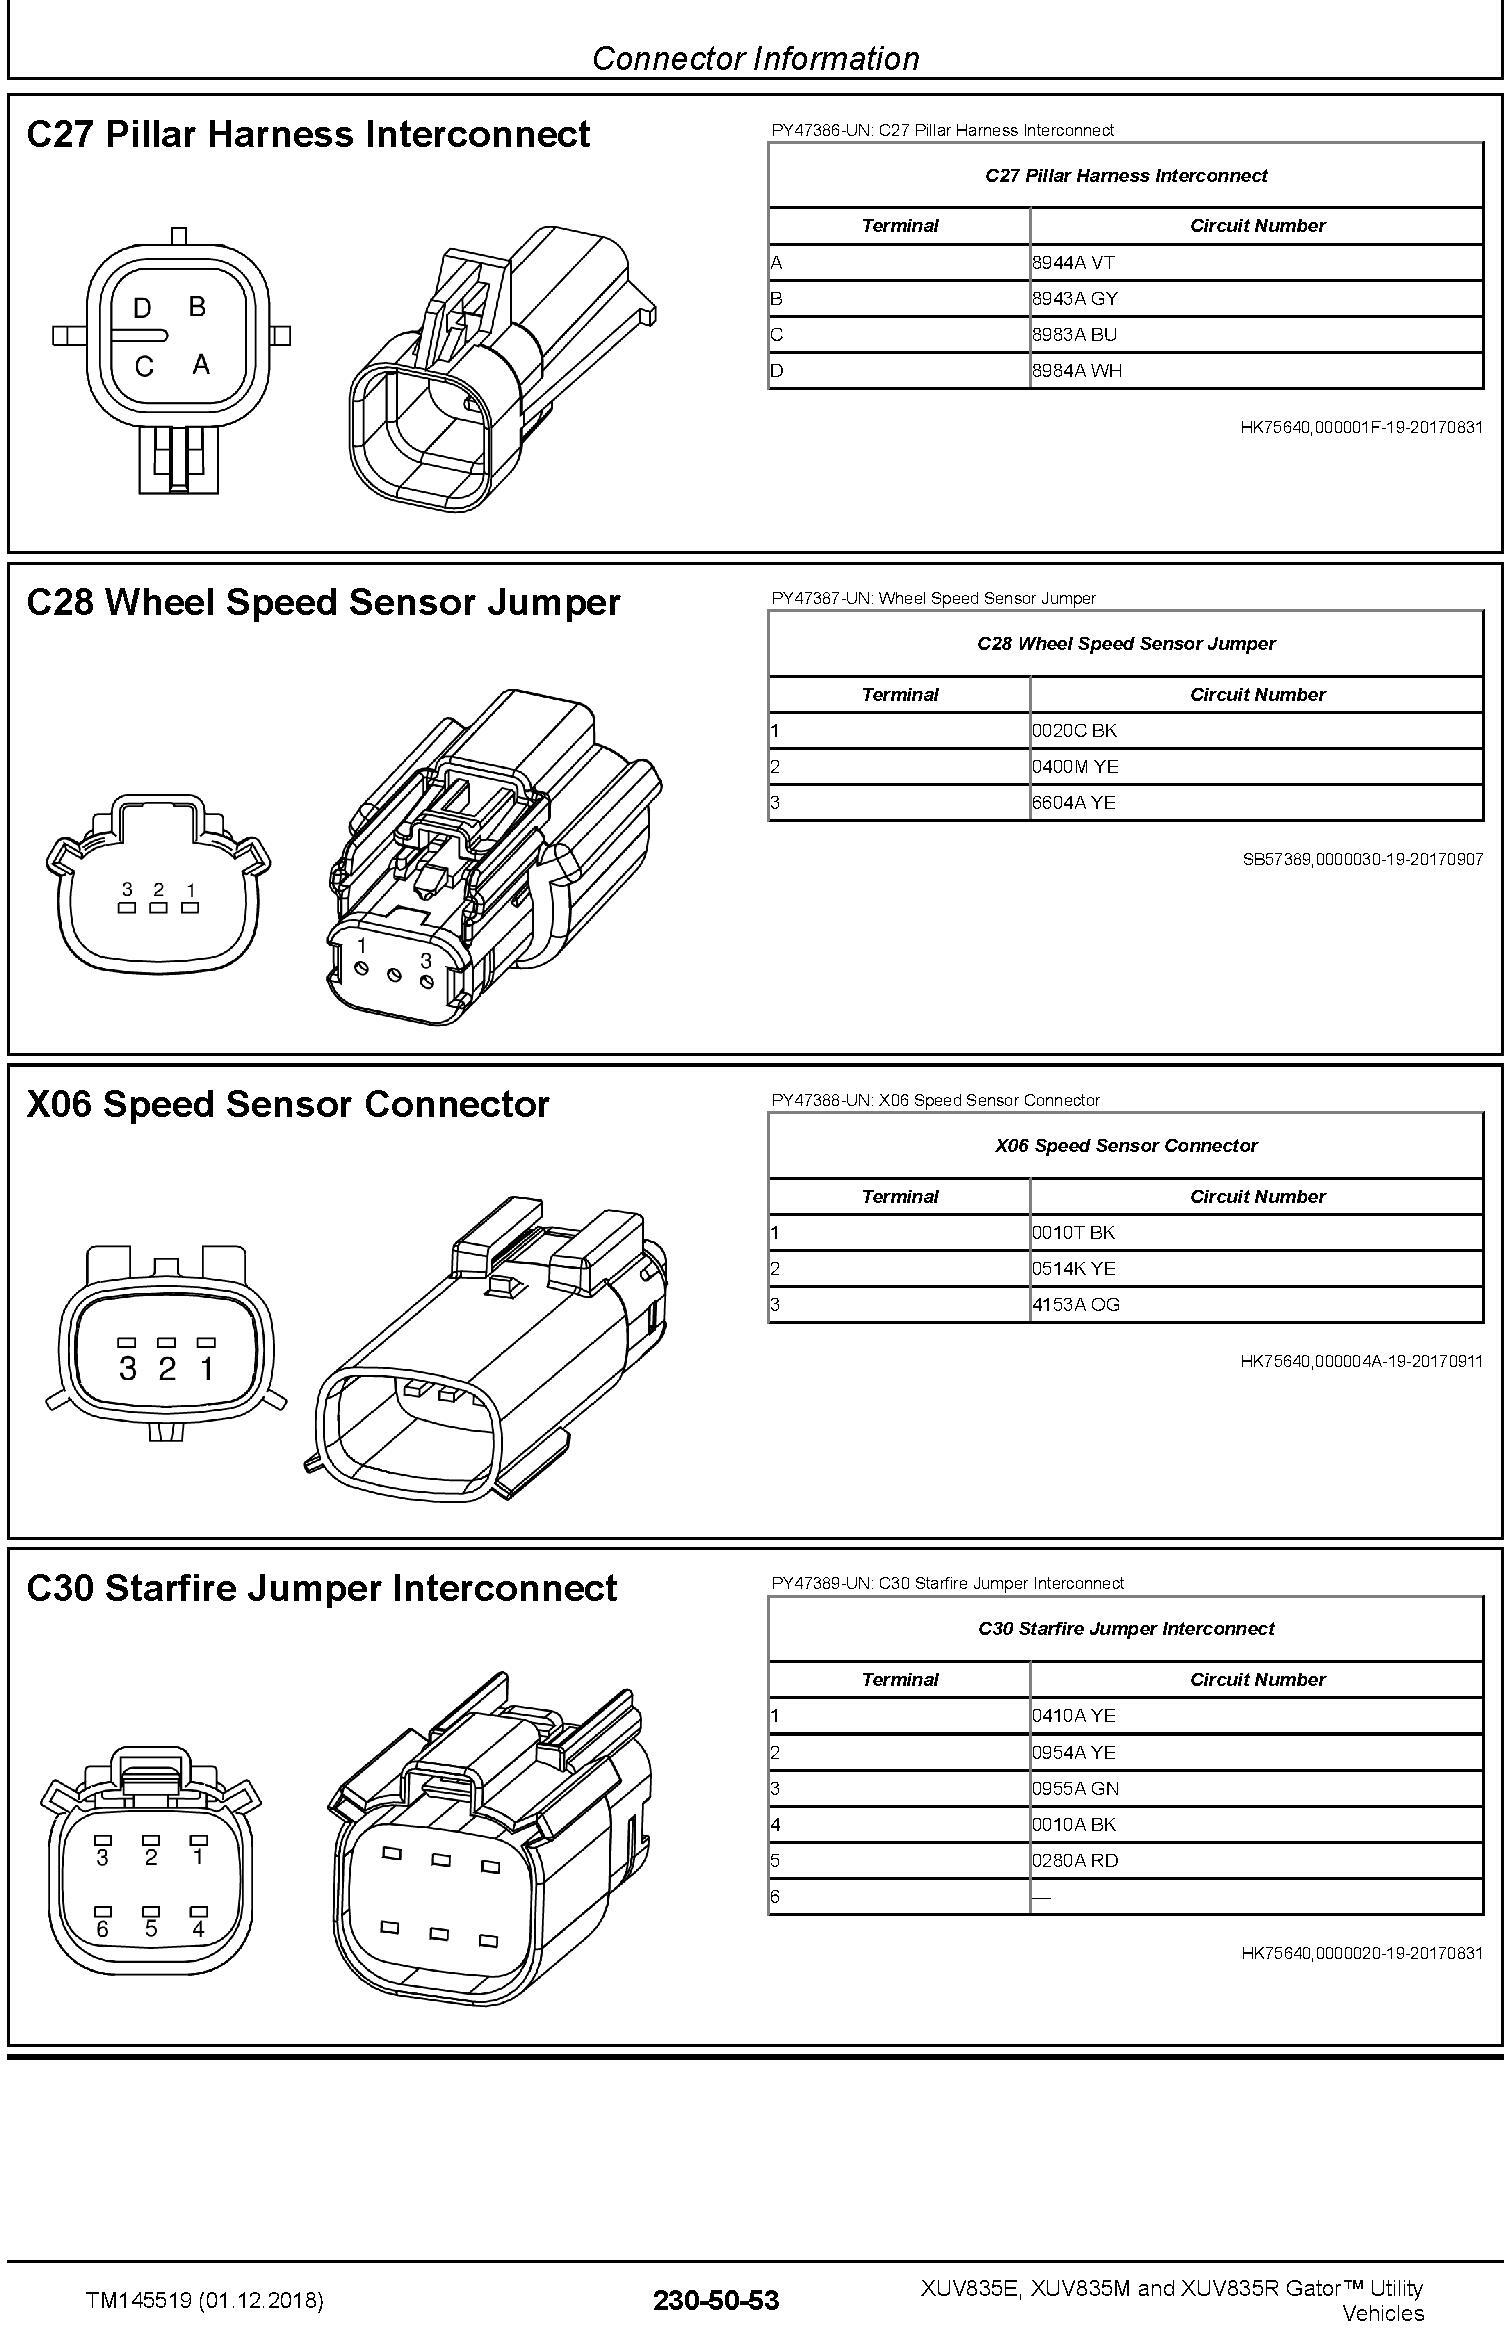 John Deere XUV835E, XUV835M, XUV835R Gator Utility Vehicles (SN.010001-) Technical Manual (TM145519) - 1